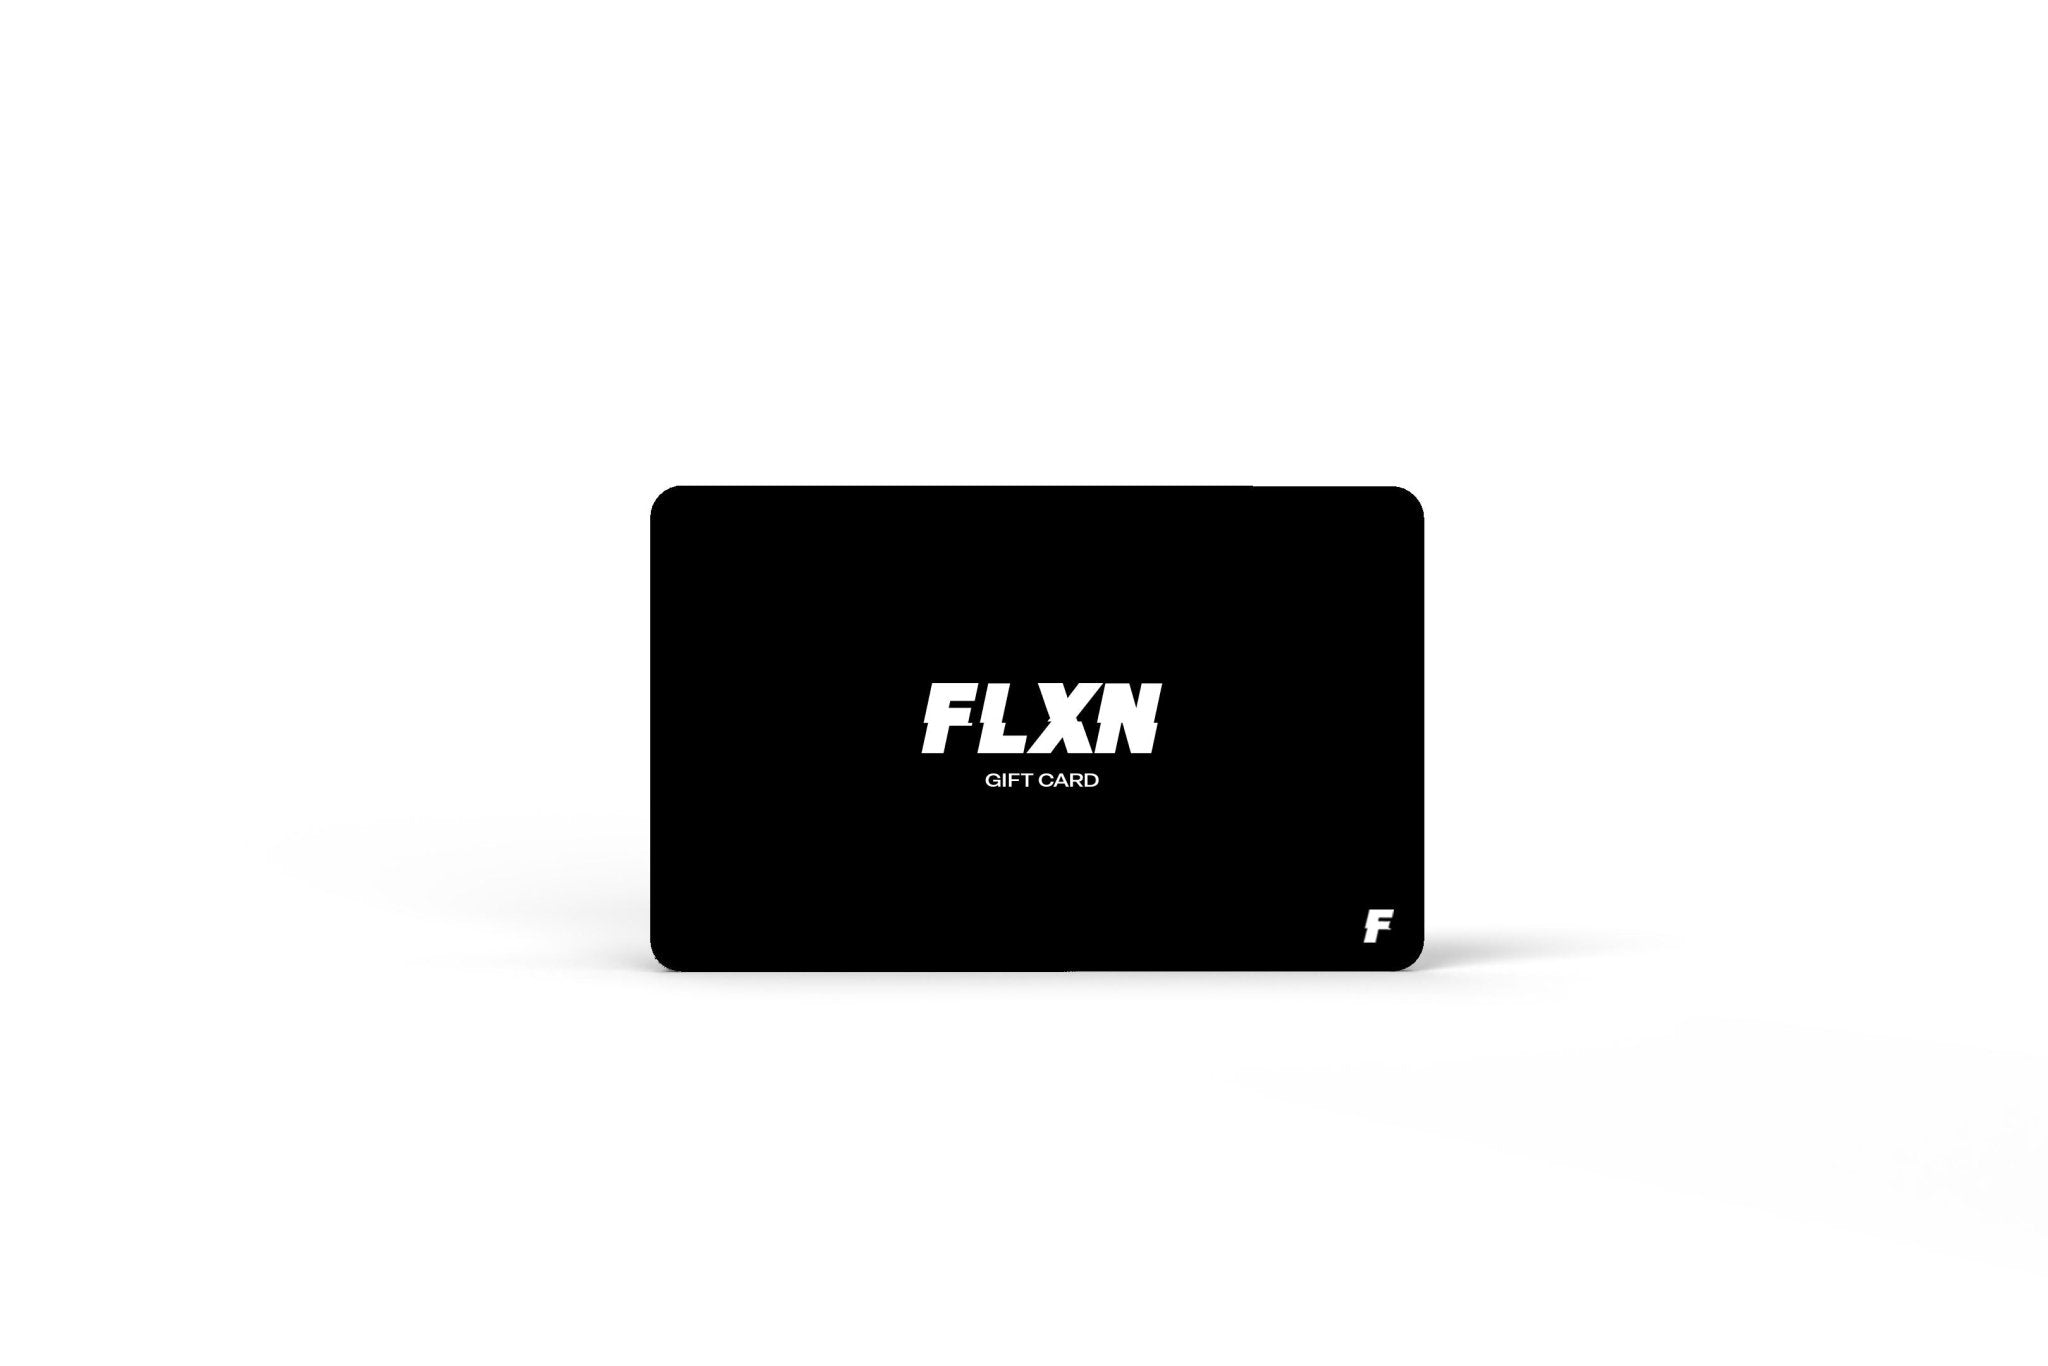 FLXN Gift Card - FLXN